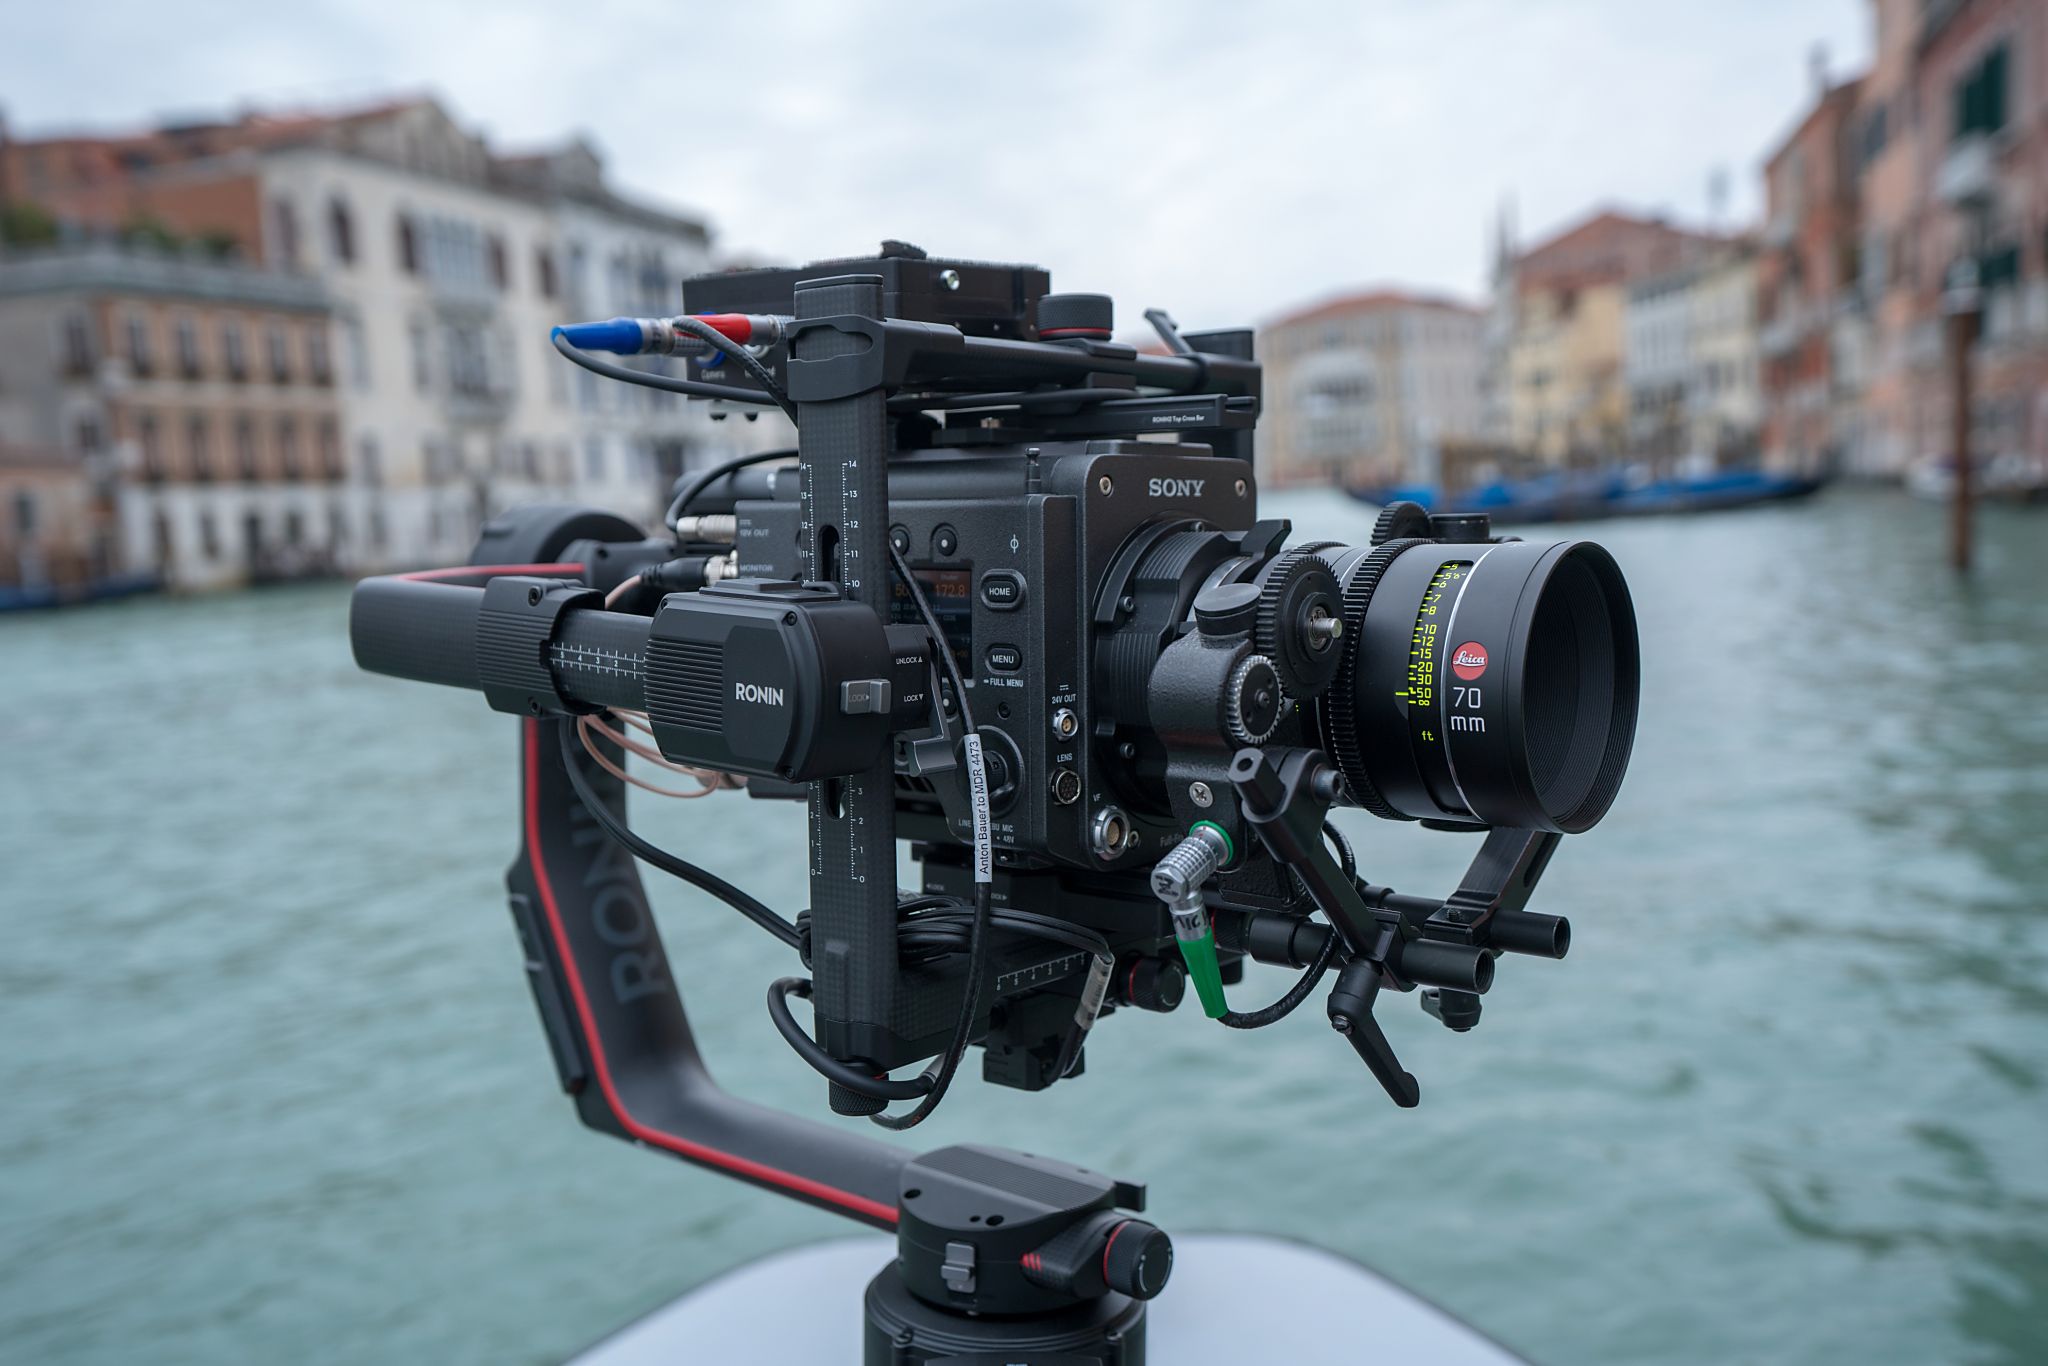 Leica Thalia 70mm prime lens on the Venice